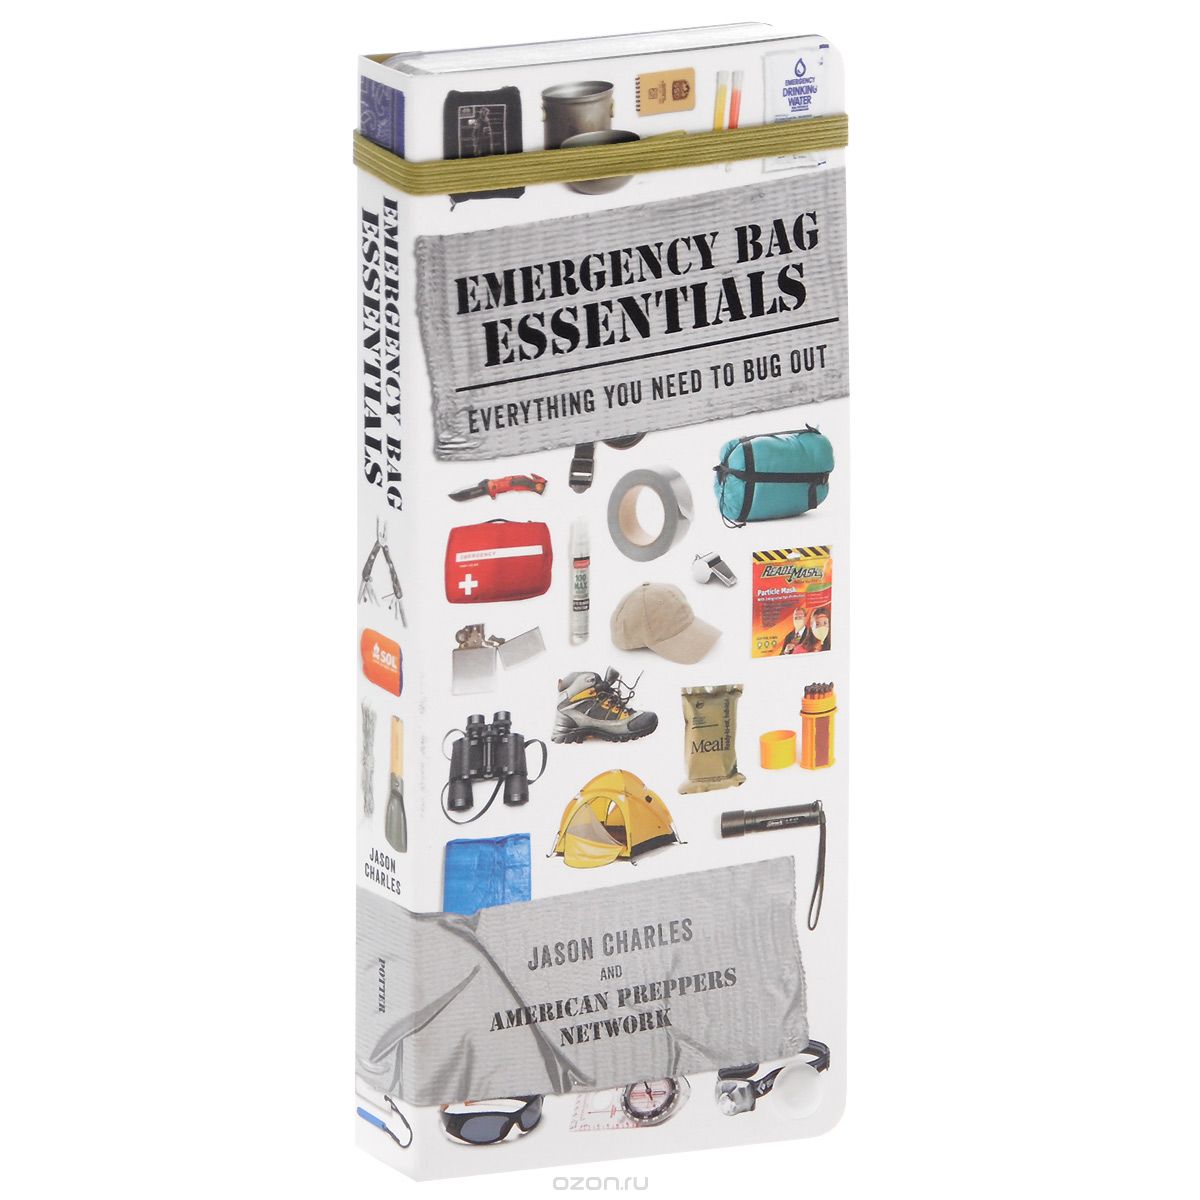 Скачать книгу "Emergency Bag Essentials: Everything You Need to Bug Out"